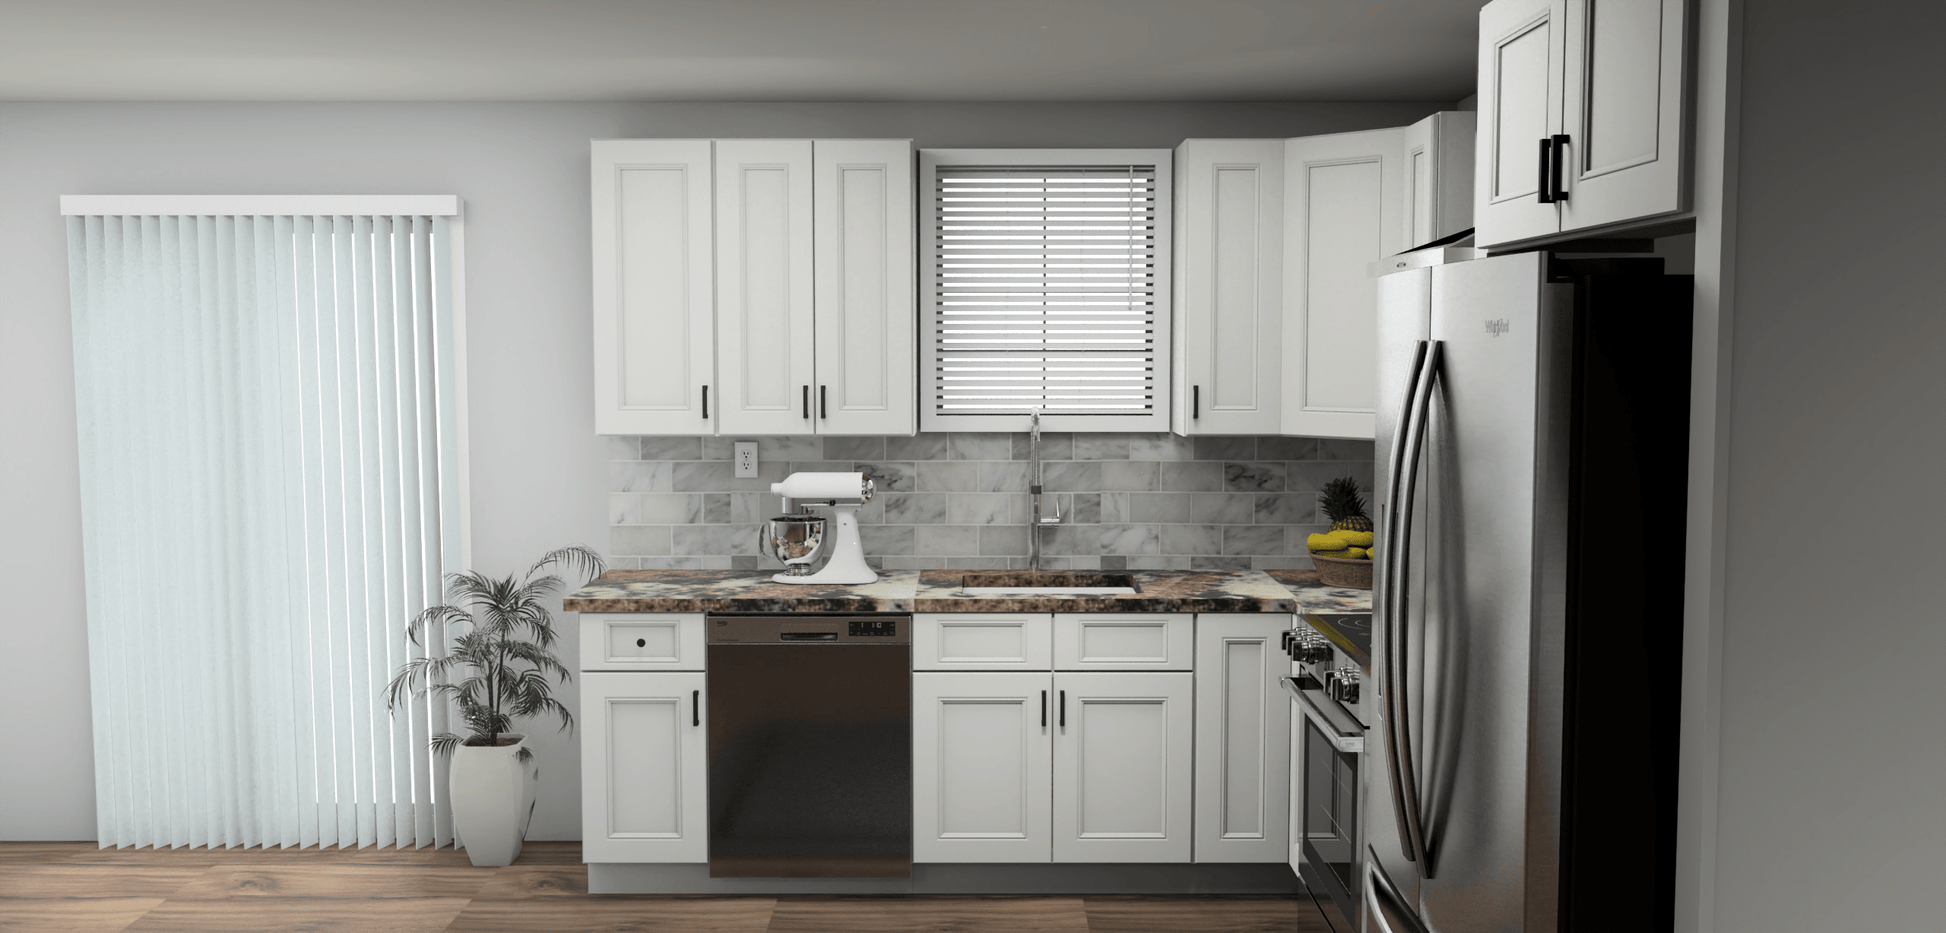 Fabuwood Allure Nexus Frost 9 x 11 L Shaped Kitchen Side Layout Photo